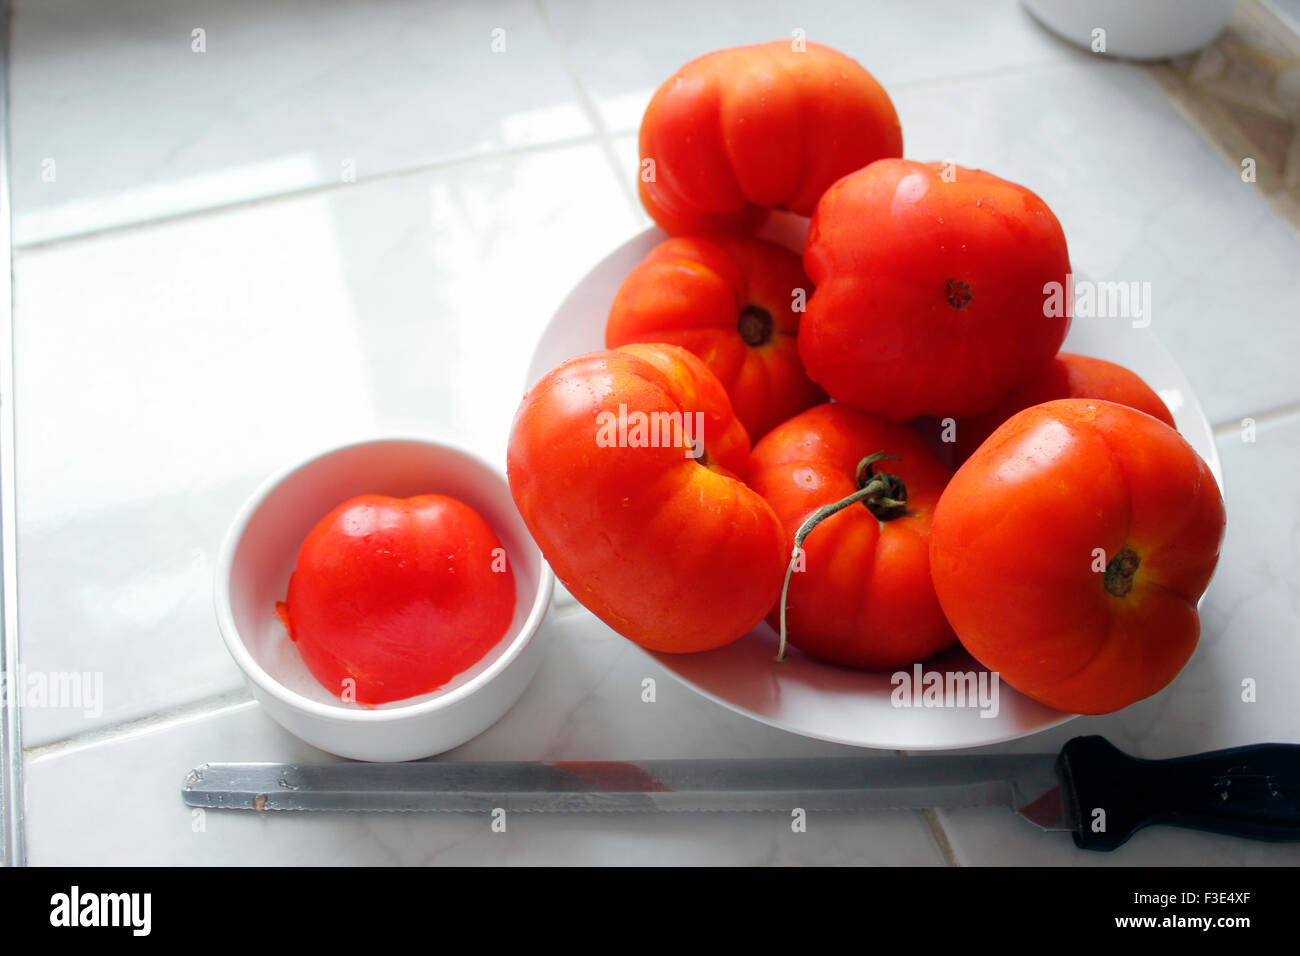 Tomatoes 'Marmande' (large beefsteak tomatoe) Stock Photo